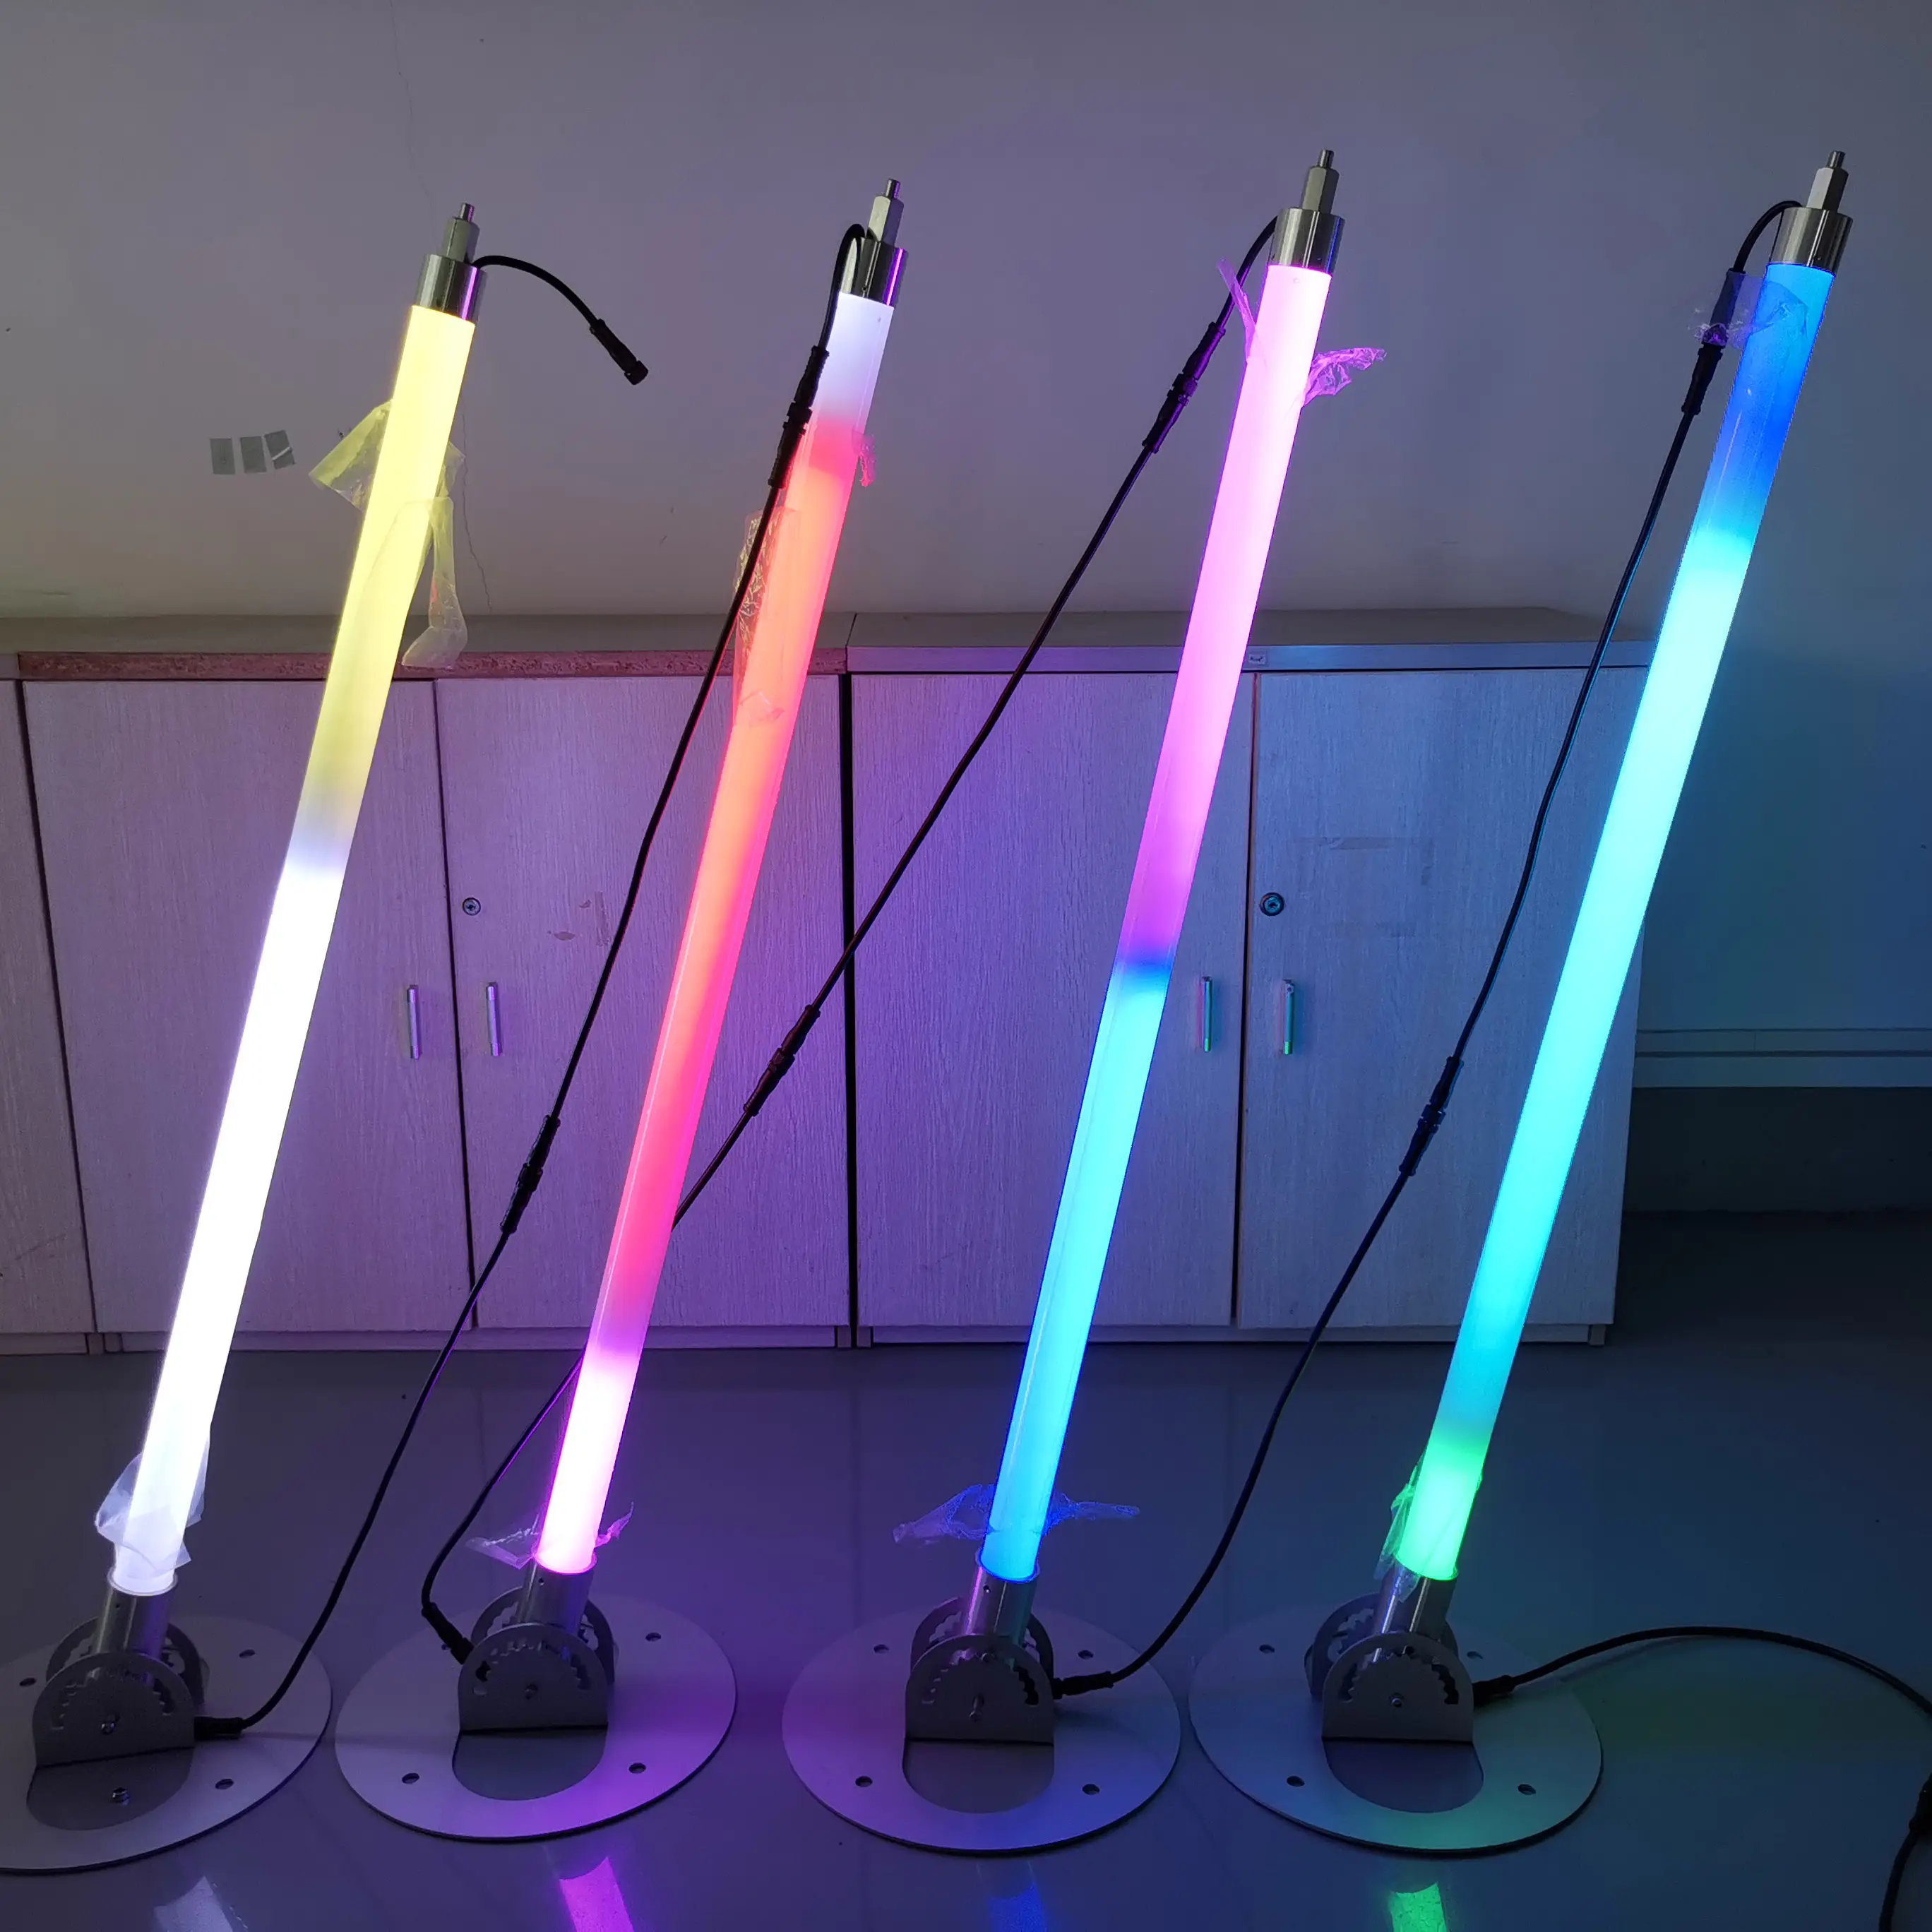 Musica attiva a colori 3D dmx512 led tube light at night club